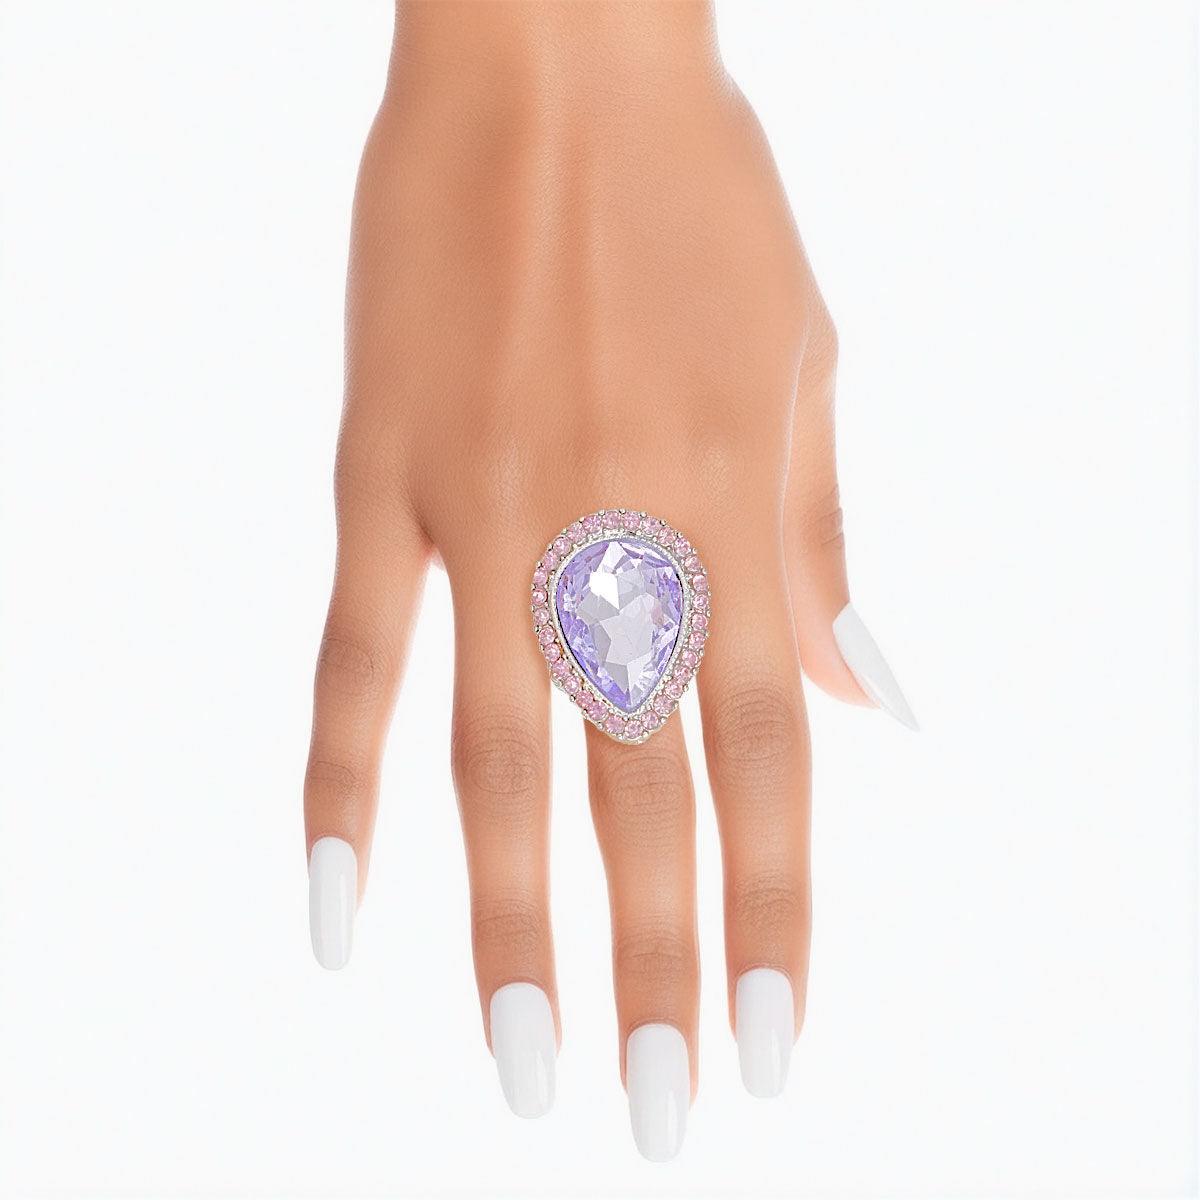 Lavender-Pear Teardrop Ring: Ultimate Fashion Statement